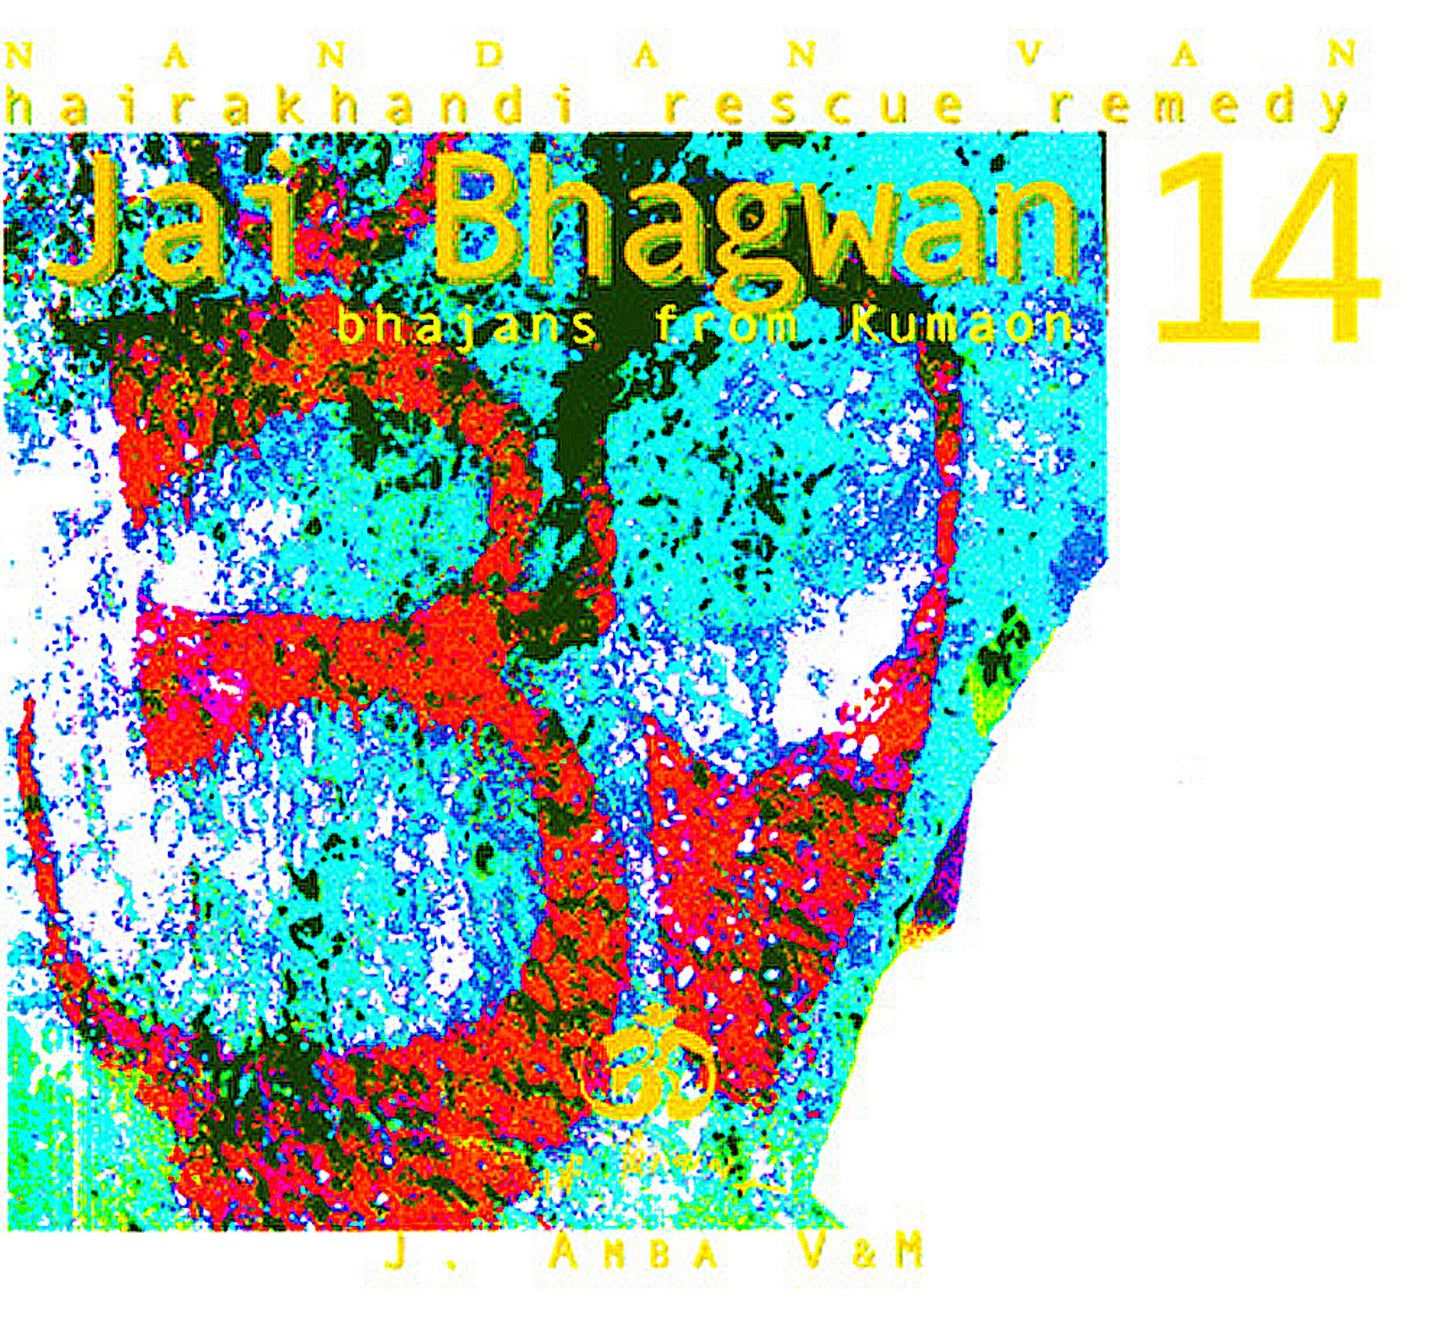 Jai Bhagwan, Kumaon Bhajans - Hairakhandi Rescue Remedy 14 - Hindu Sanatan Dharma Spirituality Music Therapy for Meditation